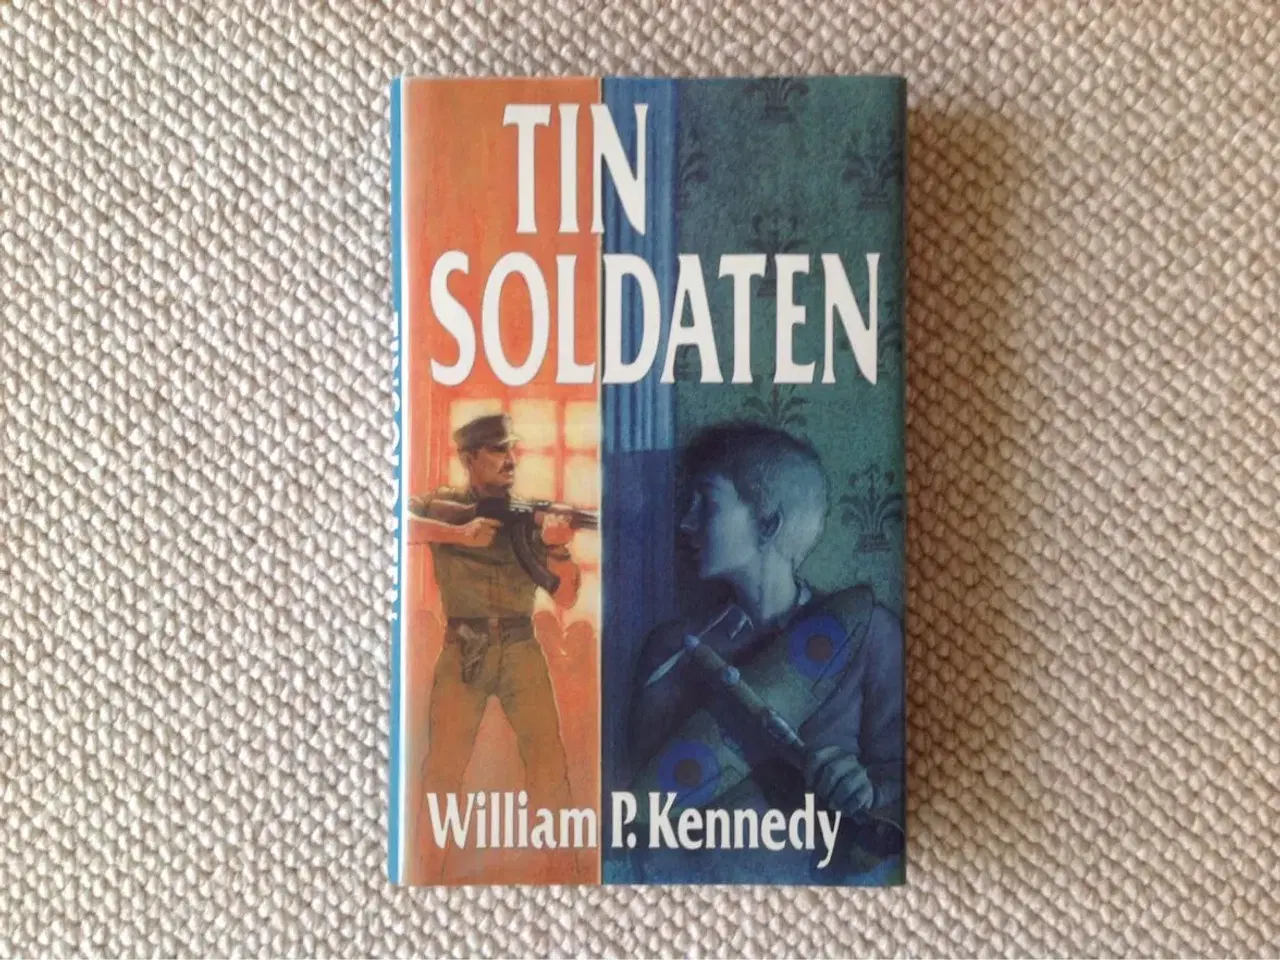 Billede 1 - Tinsoldaten" af William P. Kennedy